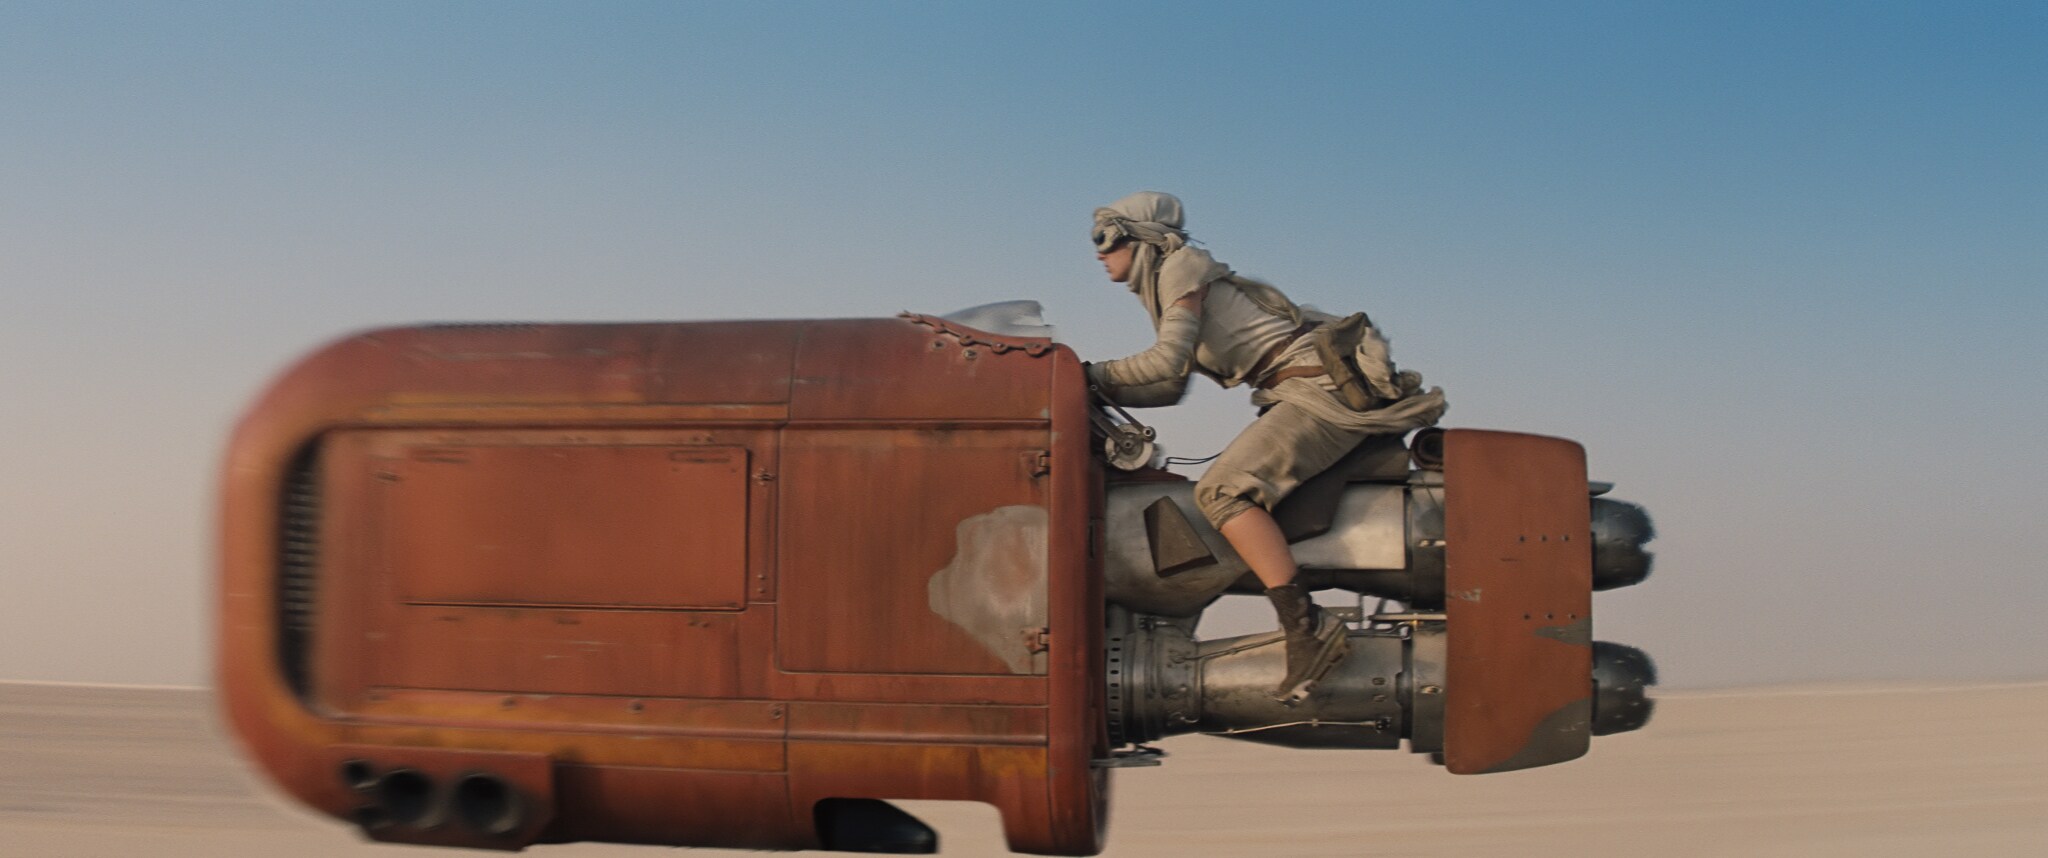 Daisy Ridley as Rey on her speeder in Jakku's desert. From the movie, "Star Wars: The Force Awakens."